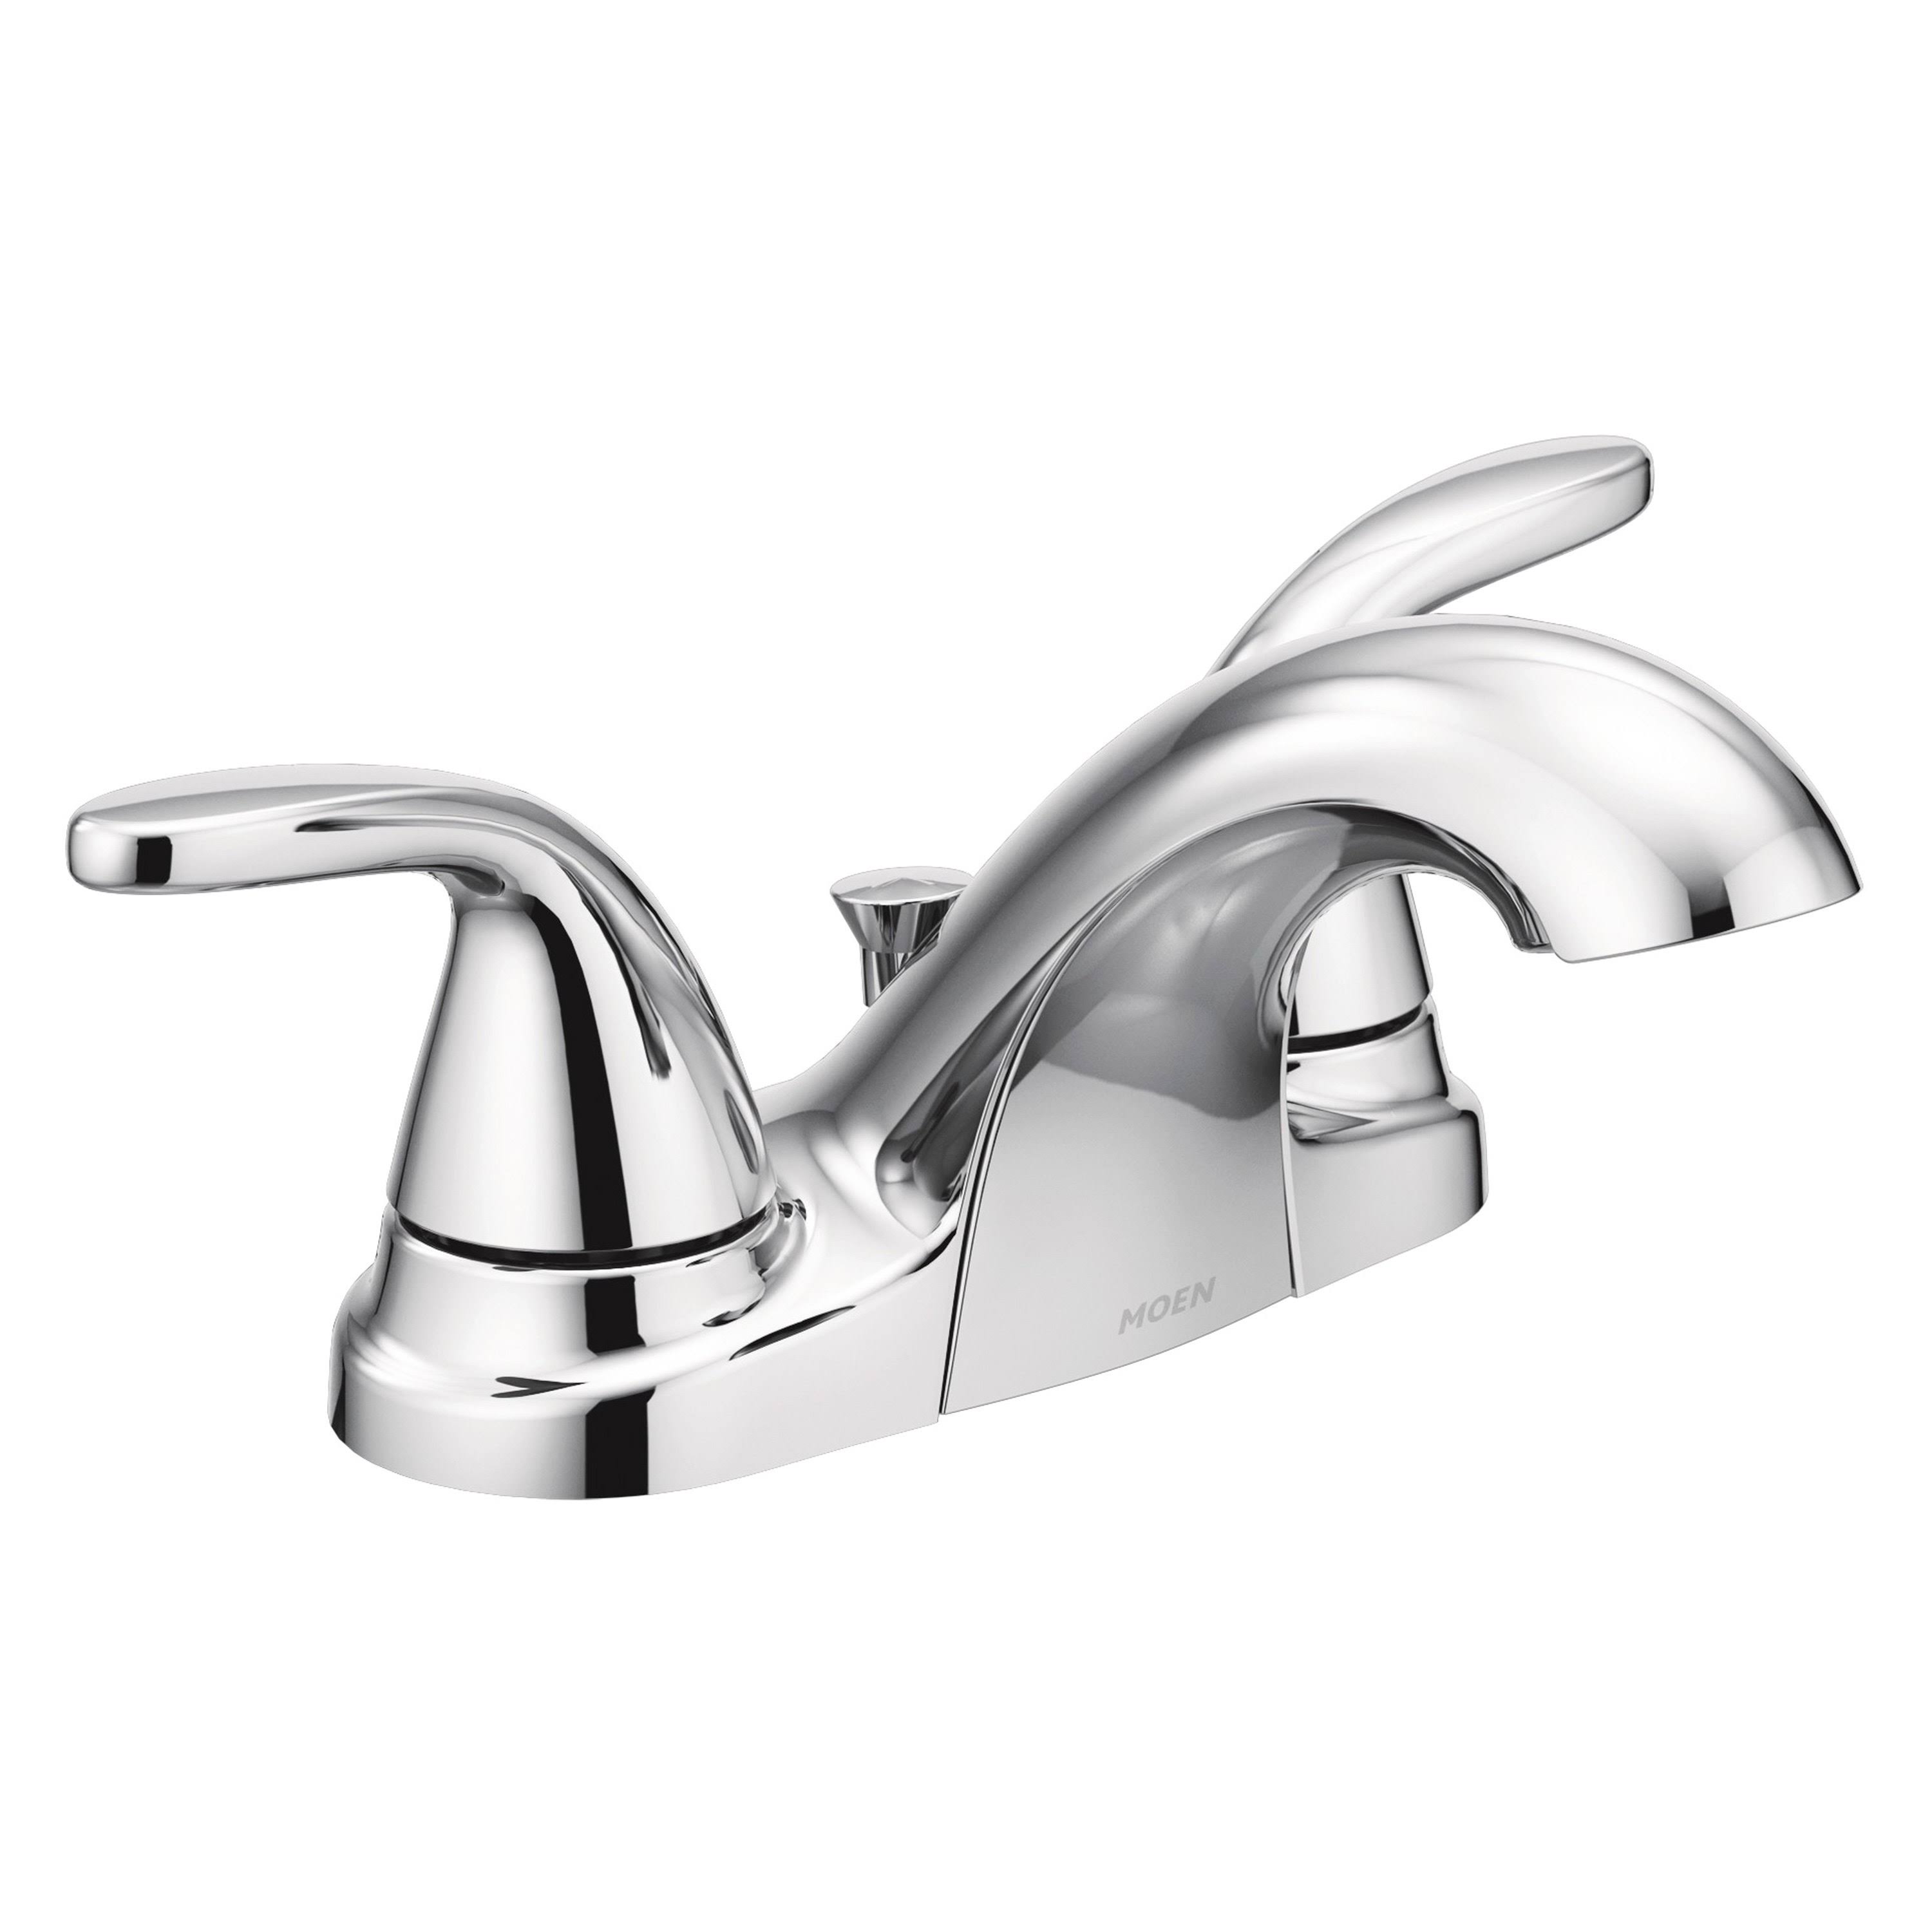 Moen Adler Two Handle Bathroom Faucet - Chrome, 1.2 GPM